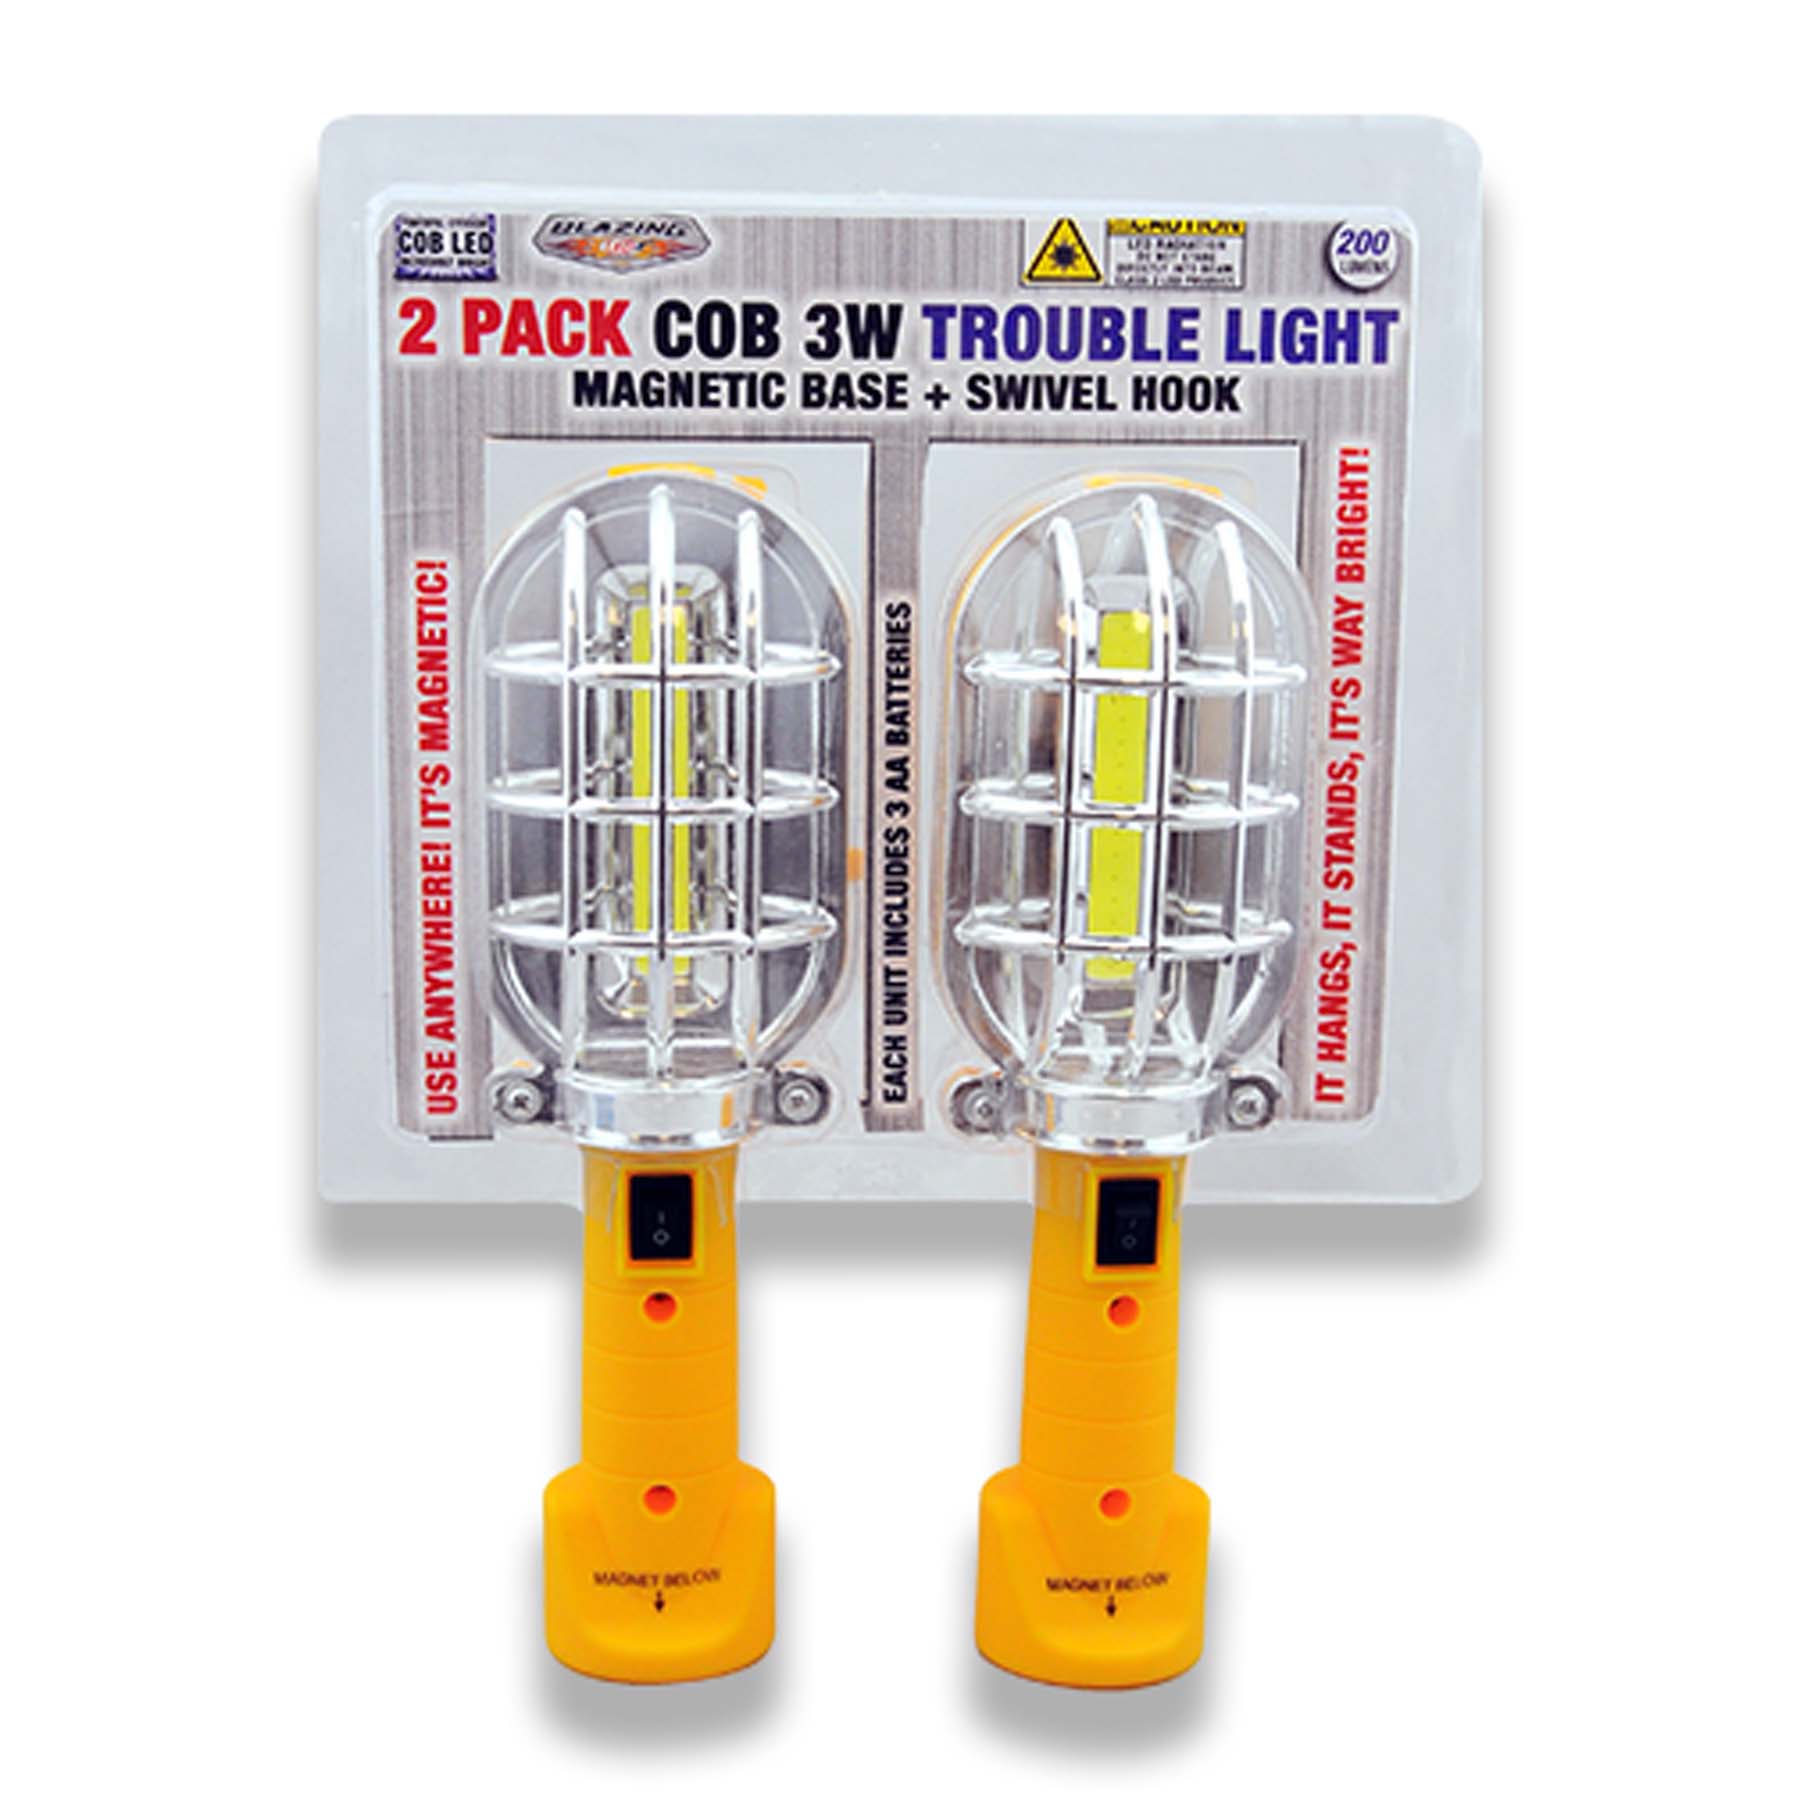 Shawshank LEDz - Lighting - Work Lights